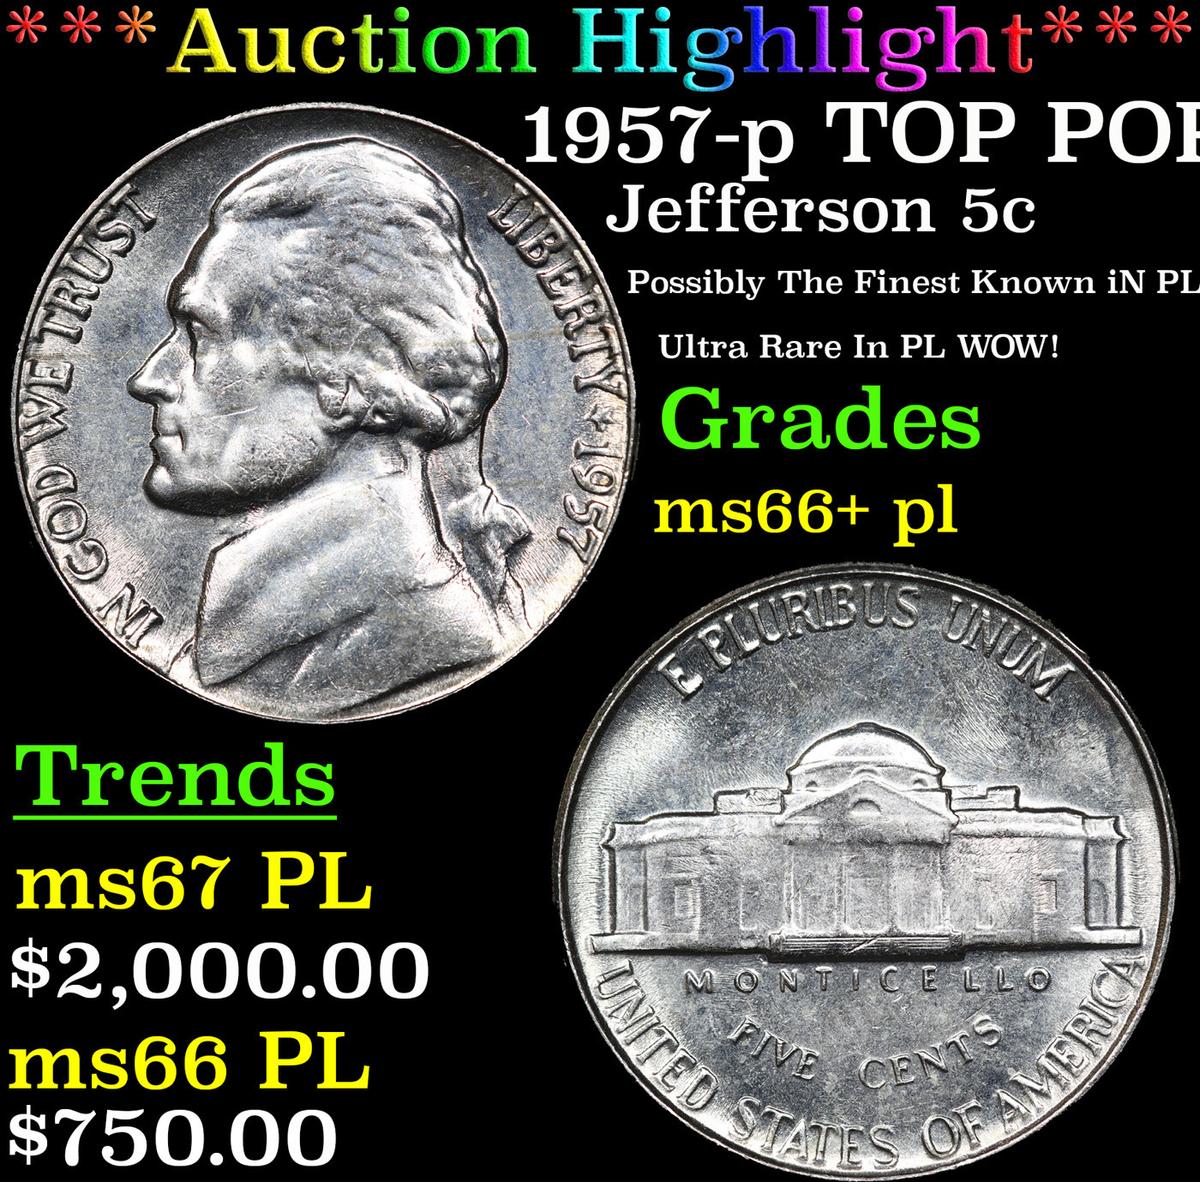 ***Auction Highlight*** 1957-p Jefferson Nickel TOP POP! 5c Graded ms66+ pl BY SEGS (fc)